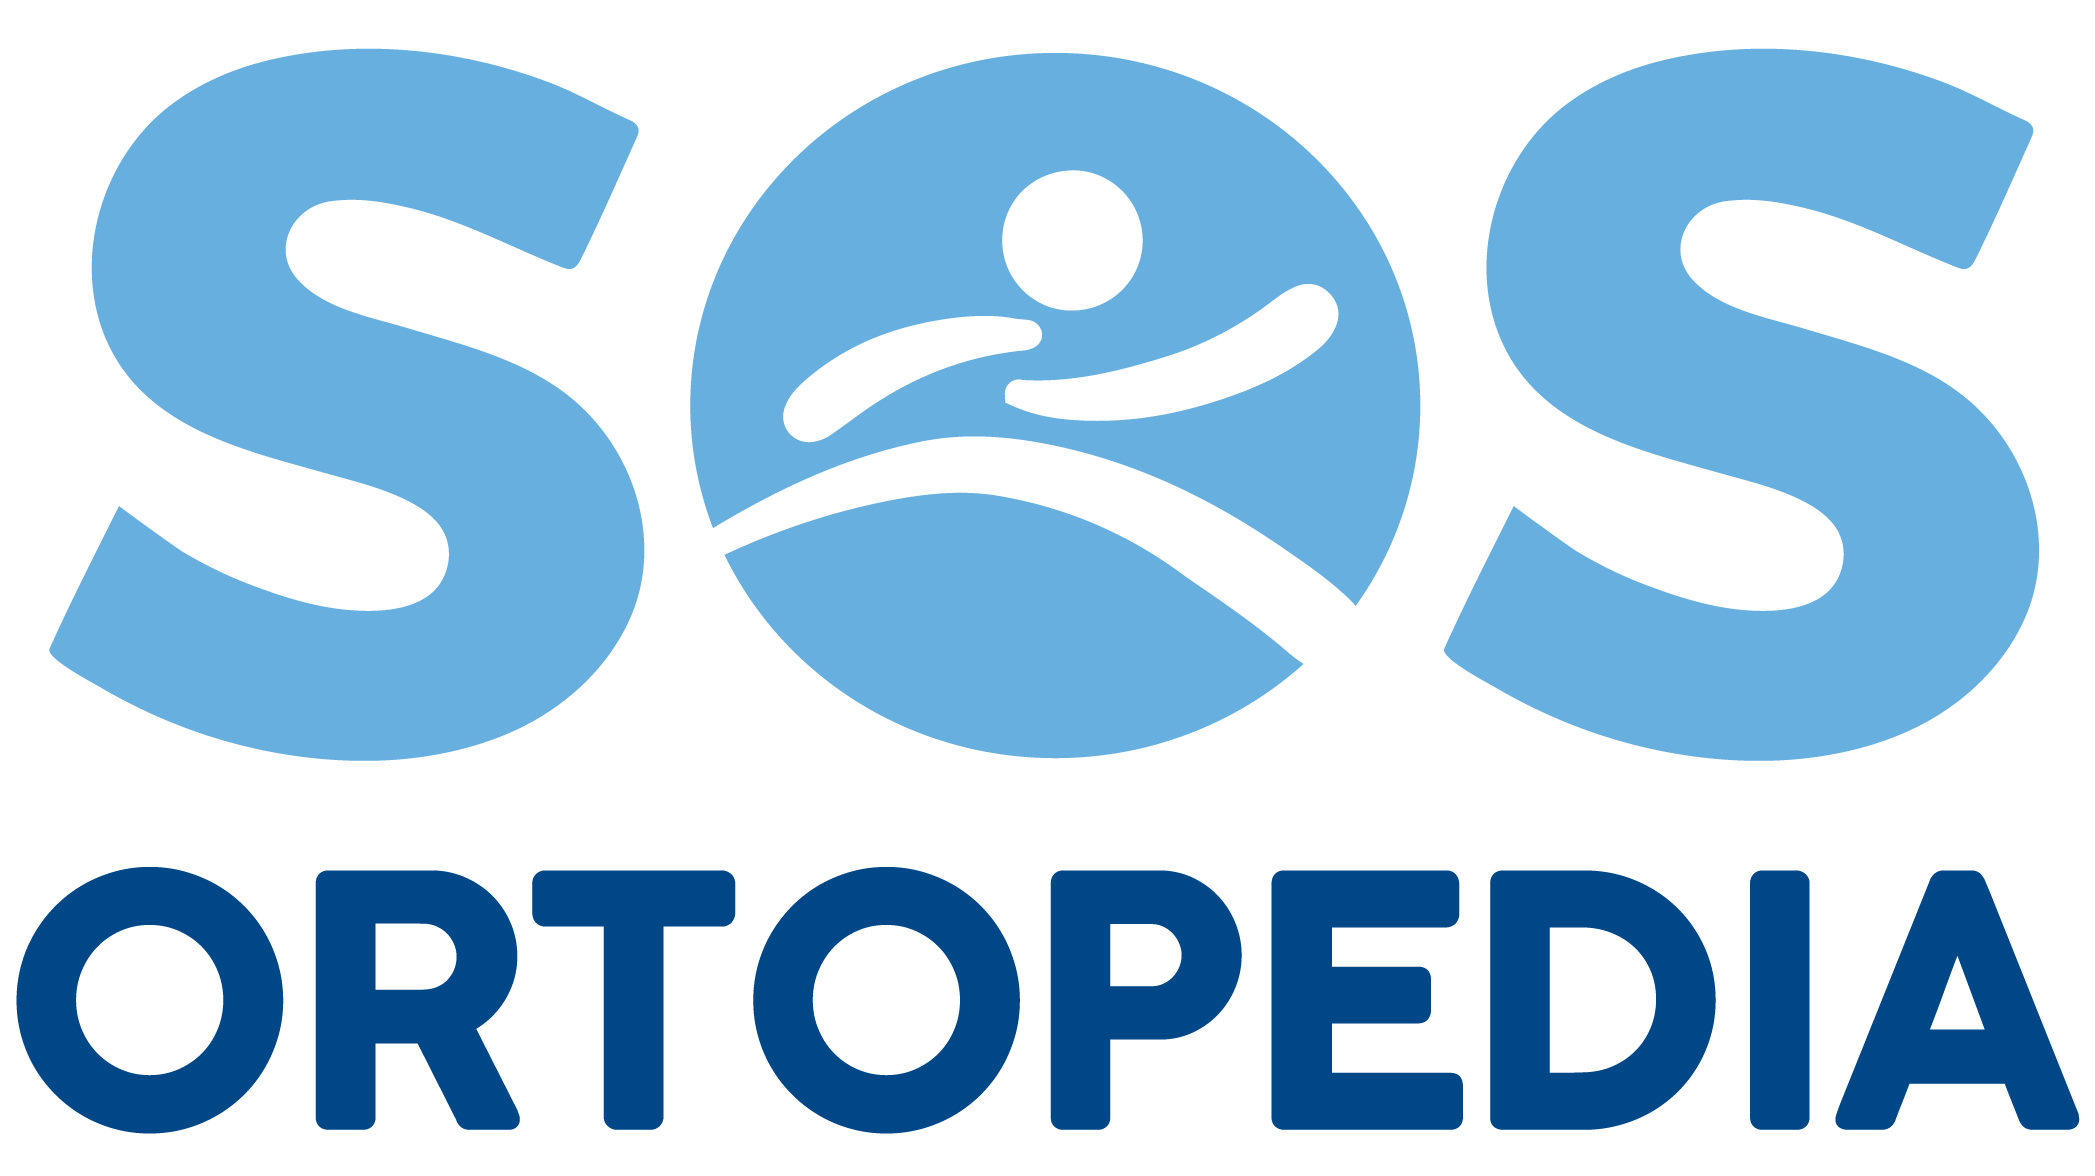 SOS Ortopedia – Unidades Kobrasol e Santa Mônica